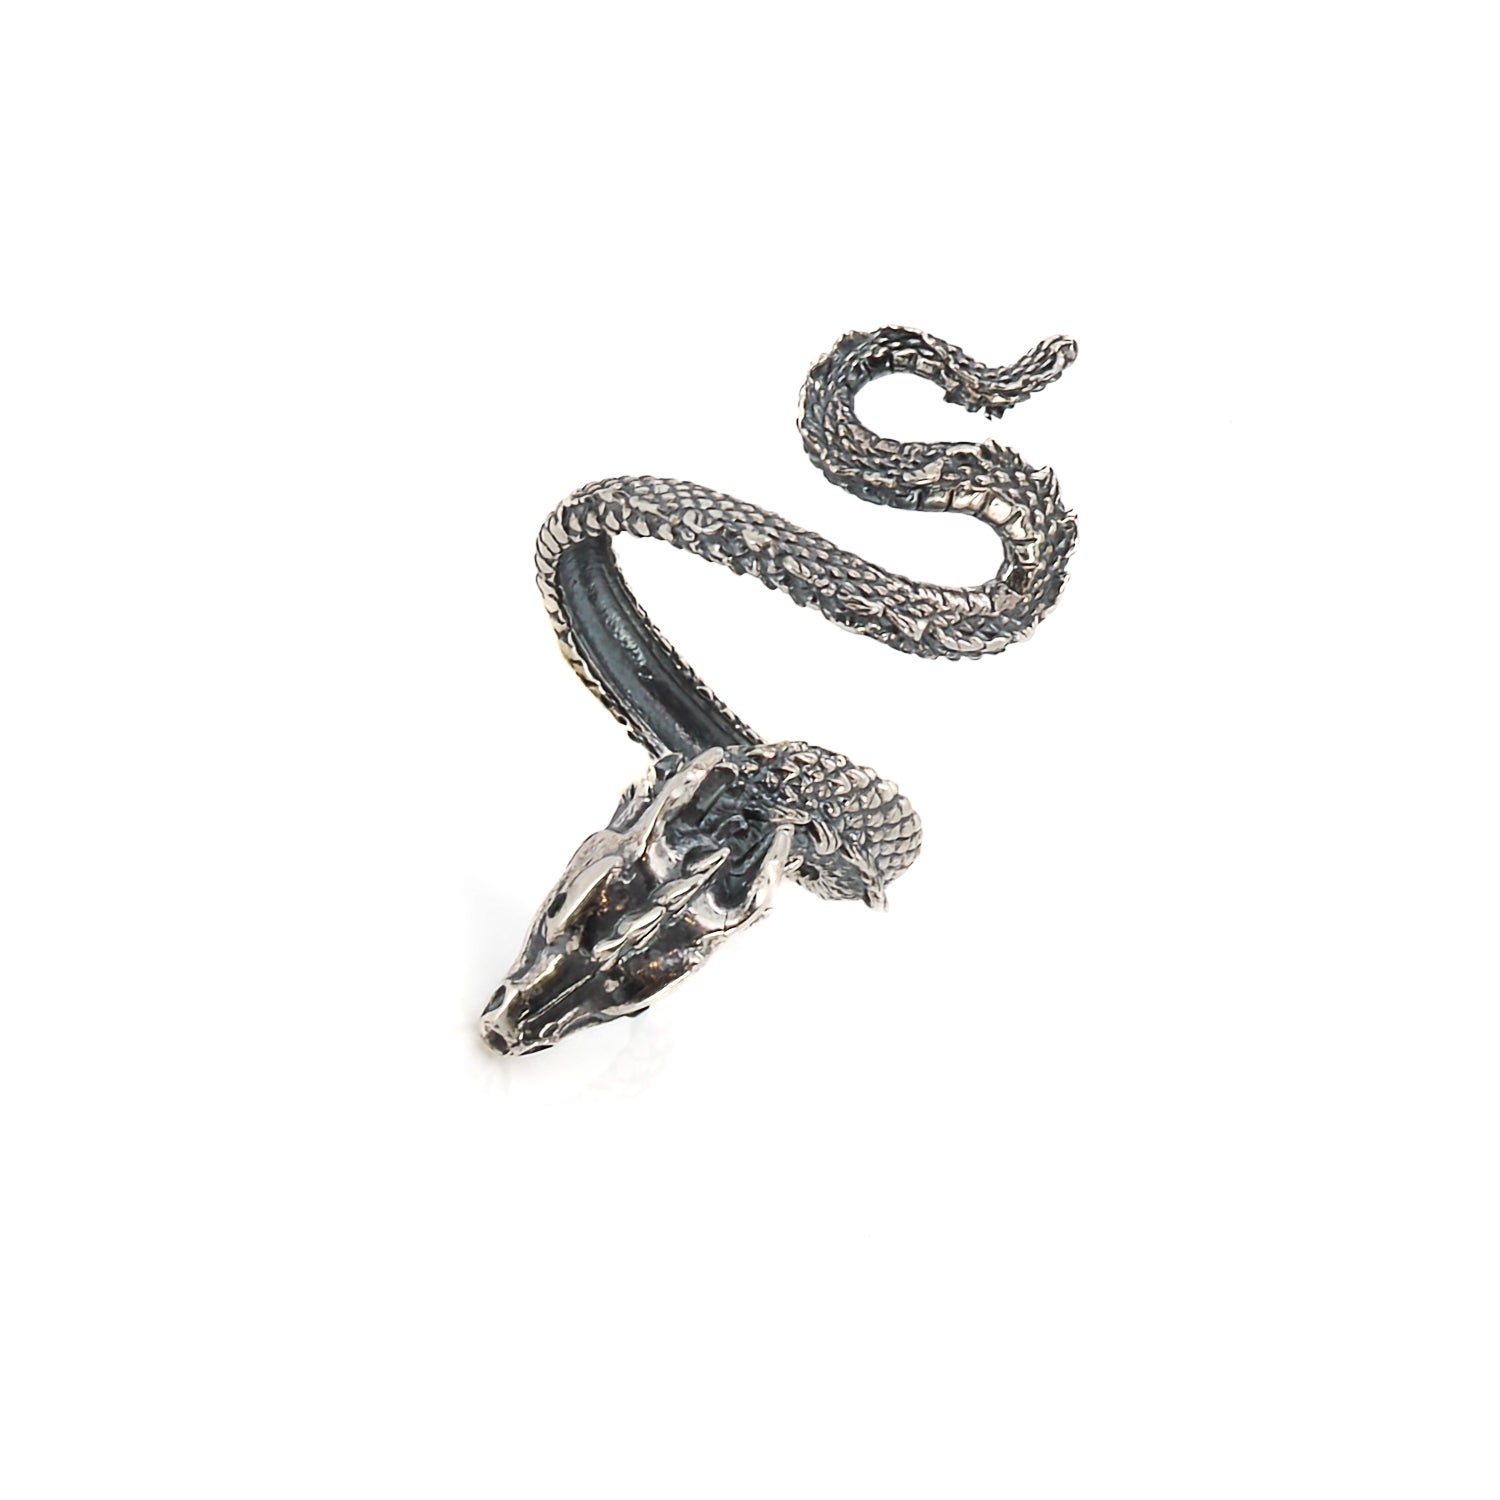 Handmade Snake Ring with Emerald Stones - Symbolic Jewelry